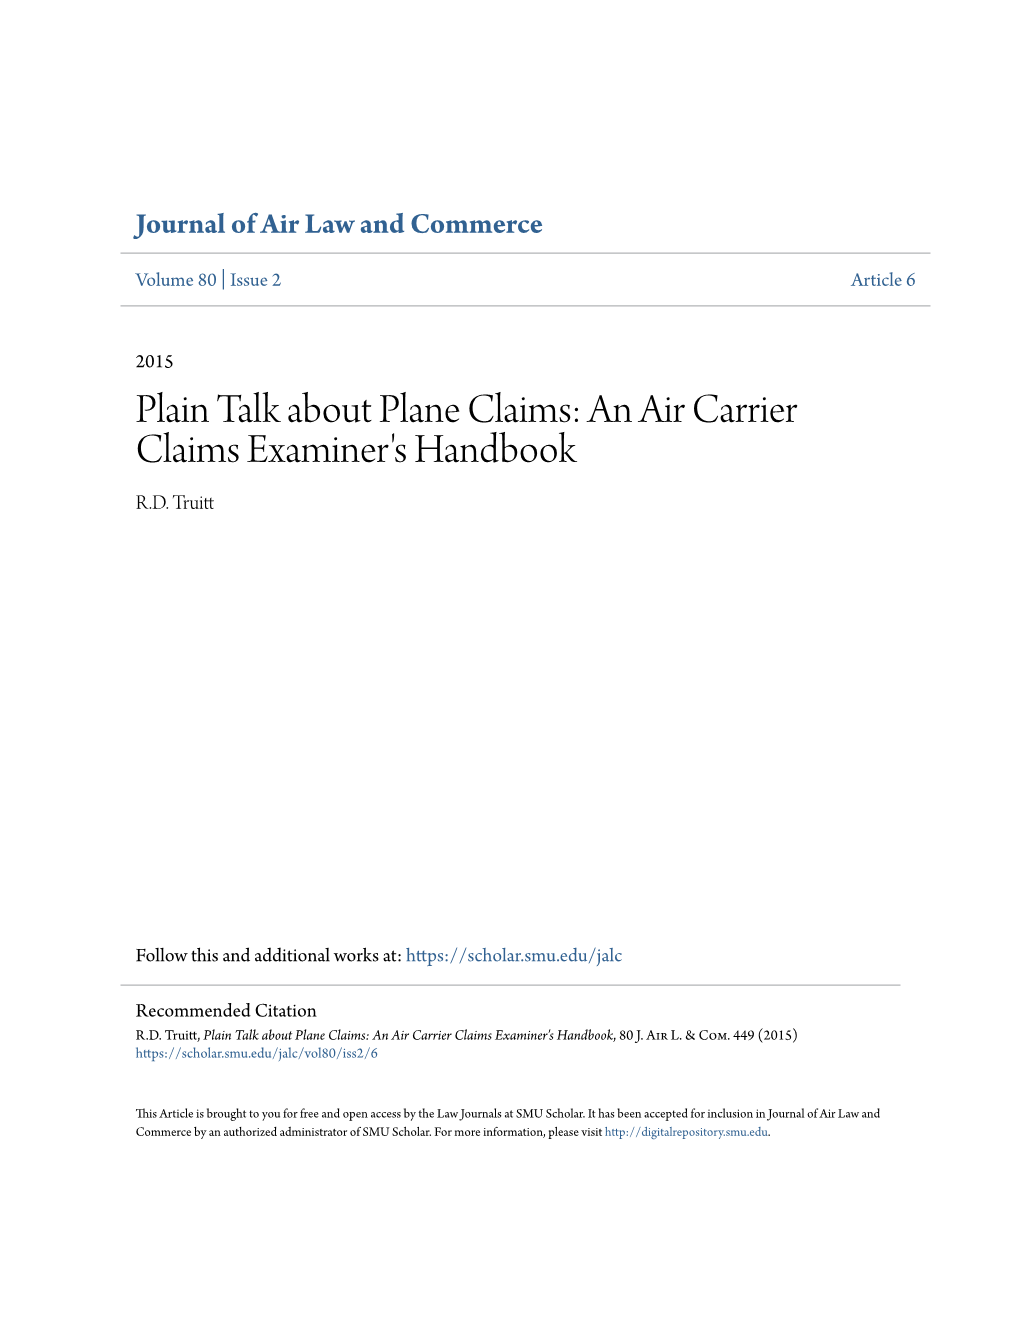 Plain Talk About Plane Claims: an Air Carrier Claims Examiner's Handbook R.D